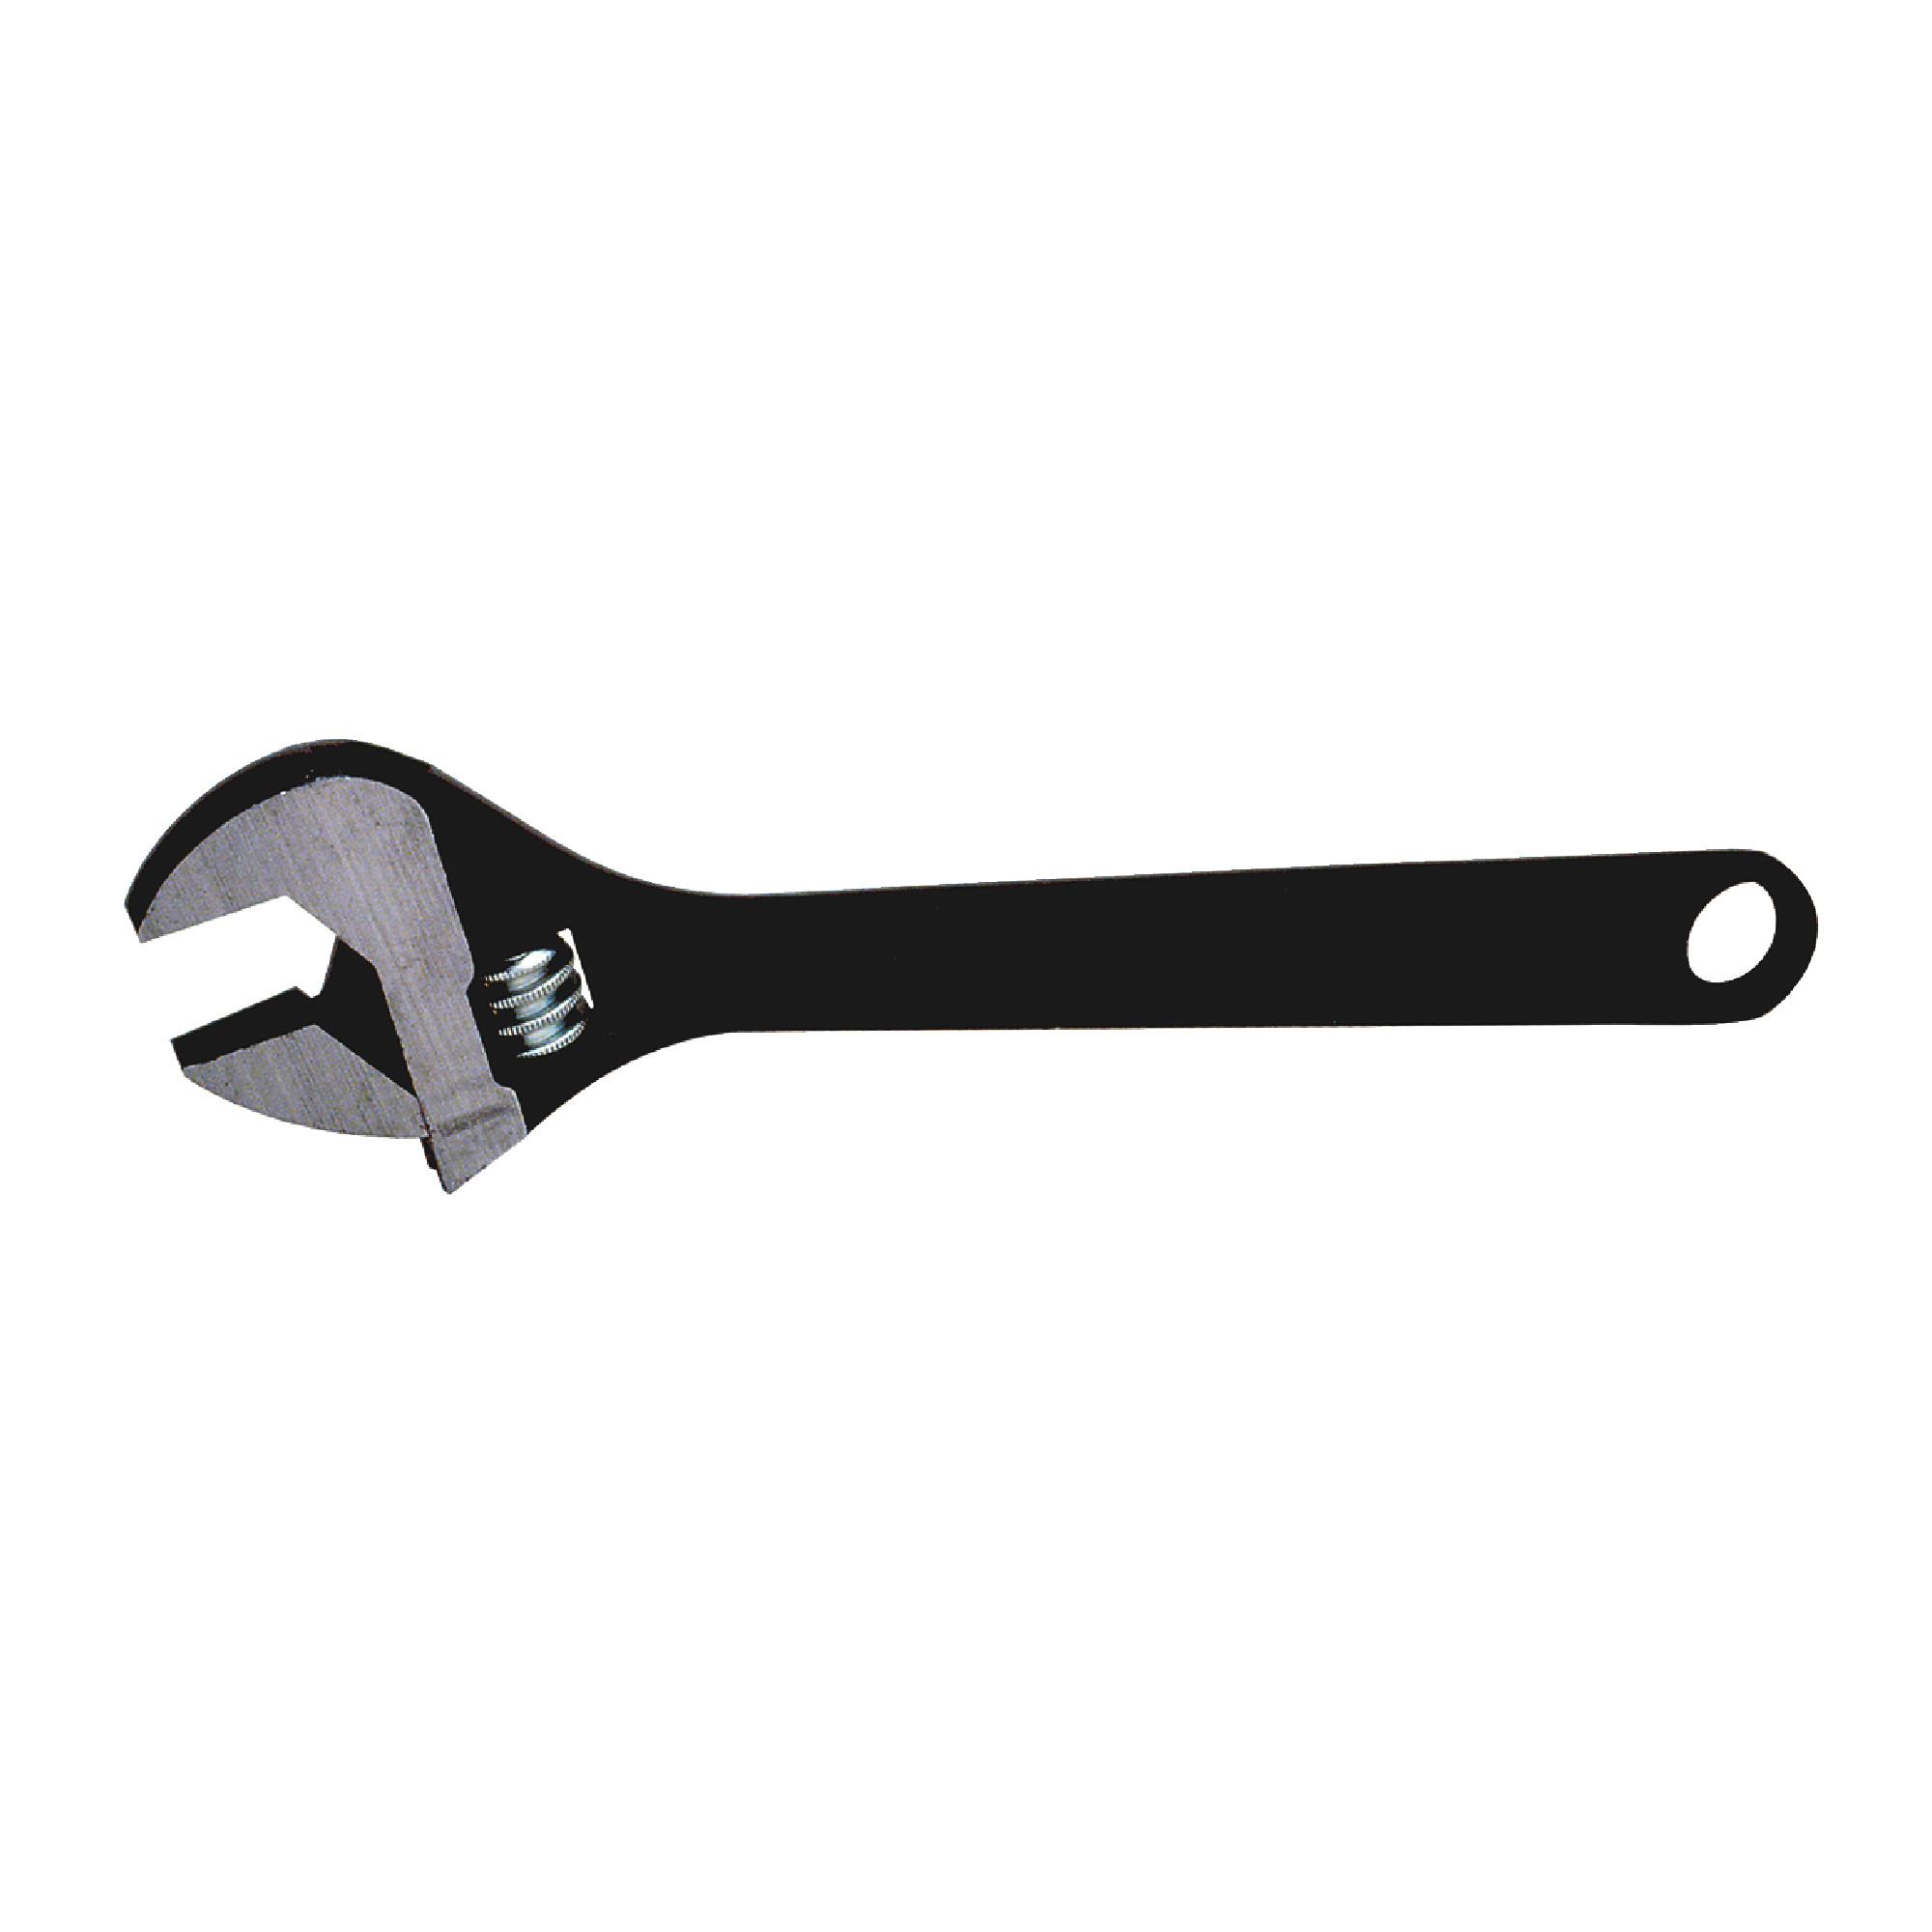 Black Phosphate Finish Adjustable Wrench - Model: AT110   SIZE: 10"